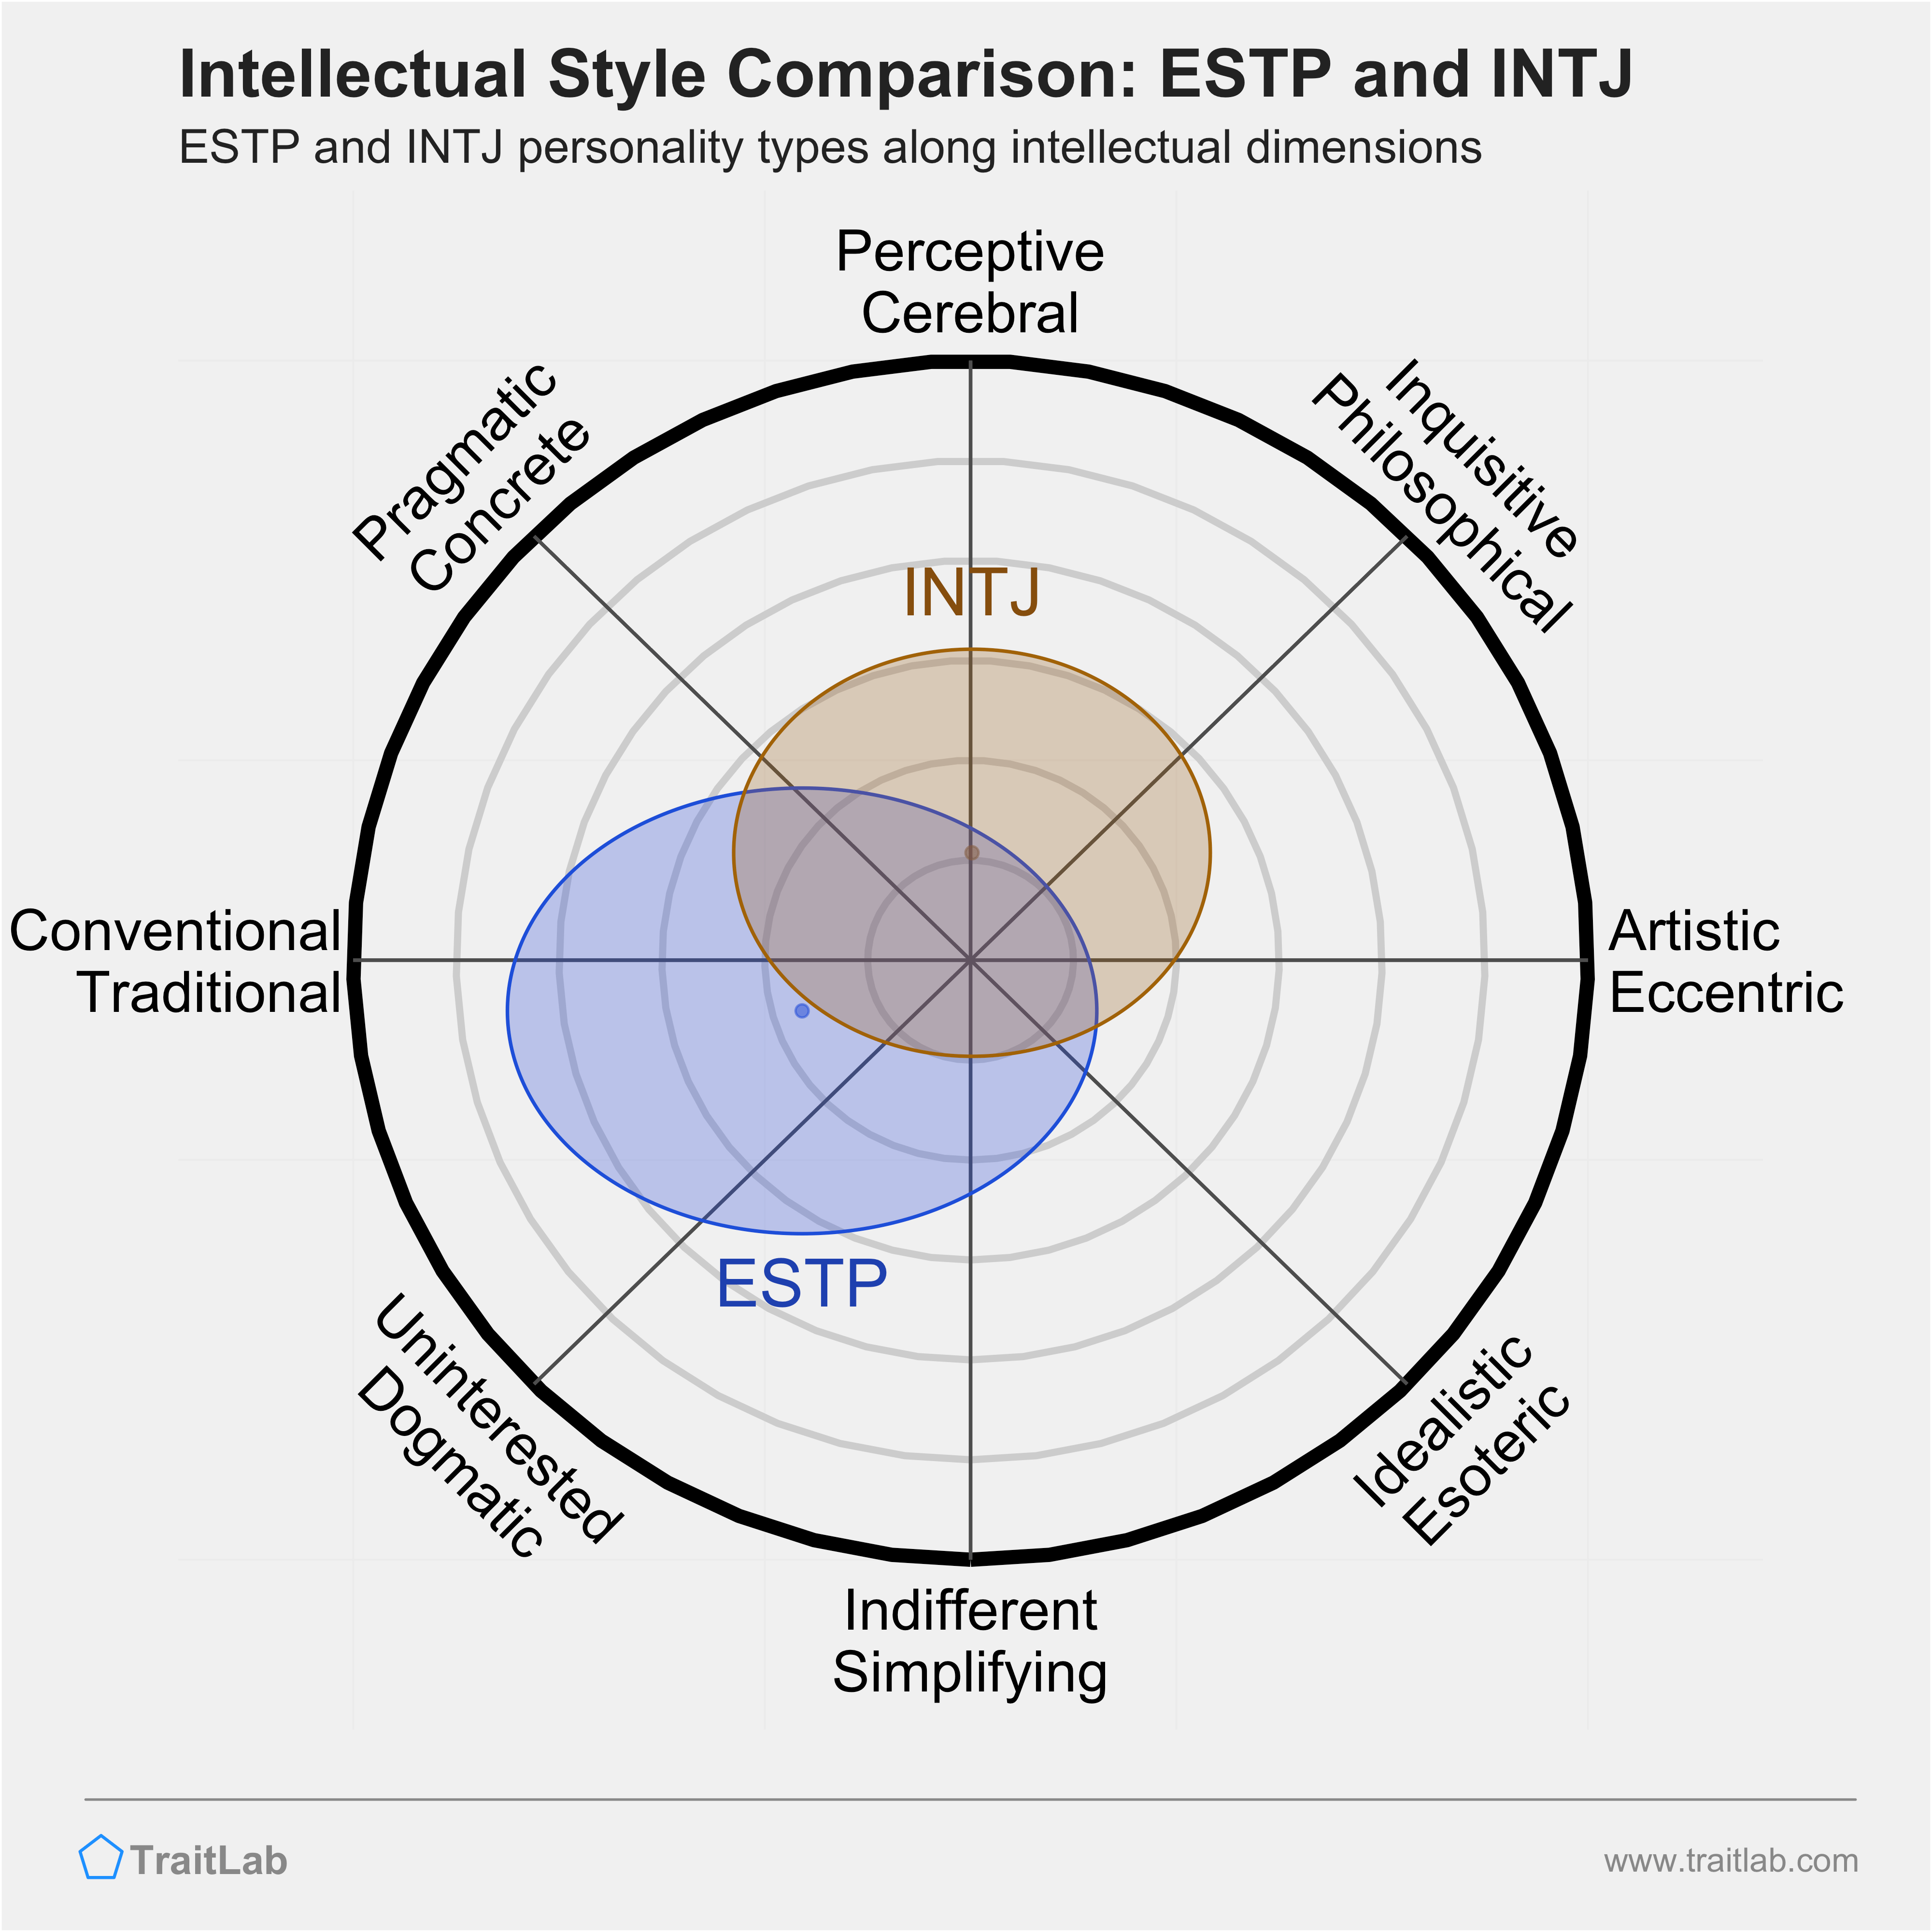 ESTP and INTJ comparison across intellectual dimensions